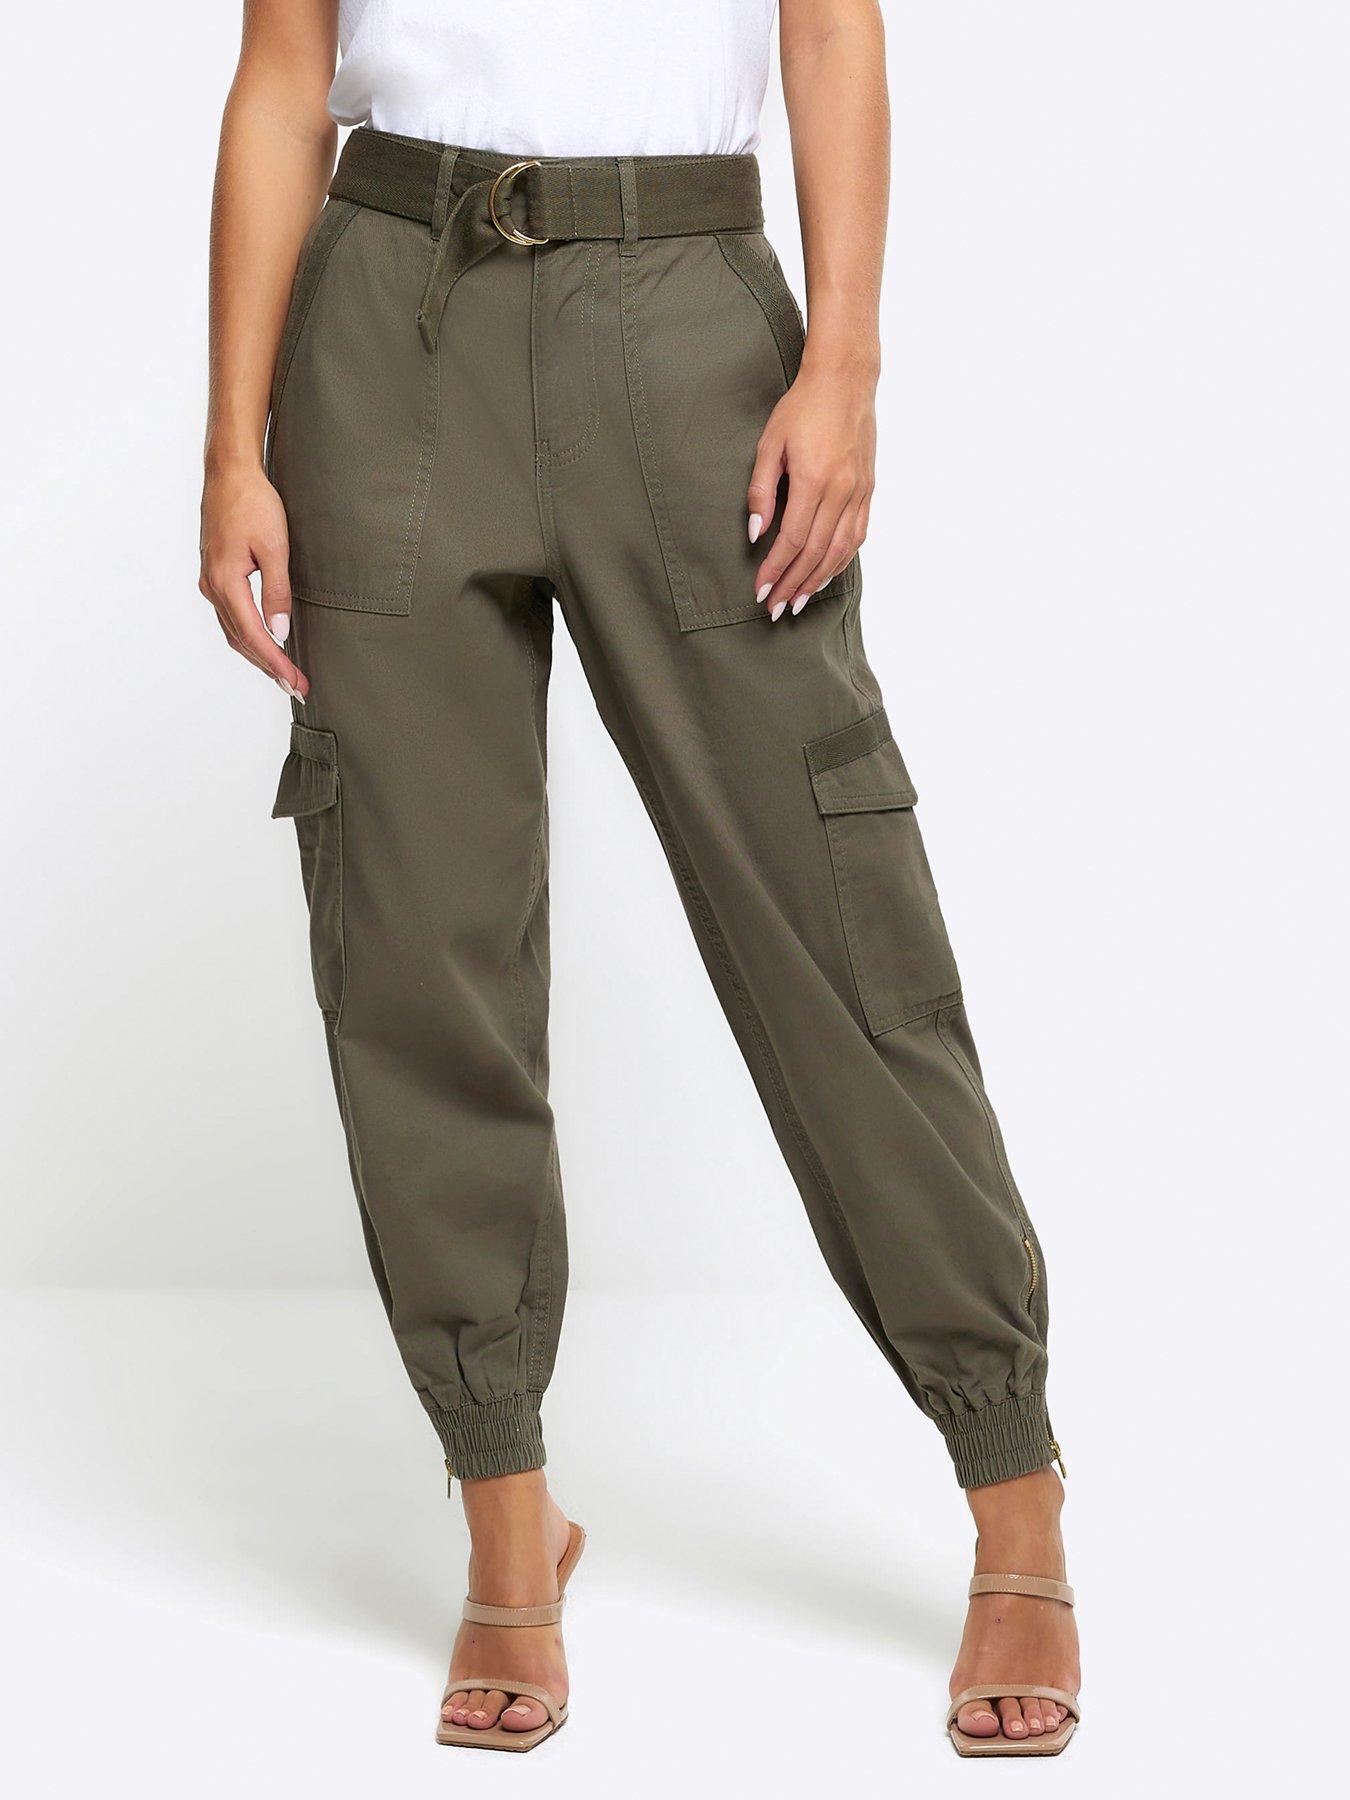 Rafaella Women's Petite Ponte Knit Slim Leg Pants - Comfort Fit in Dark  Chocolate Beige, Size 10P, Polyester/Rayon/Spande… | Ponte pants, Slim leg  pants, Ponte knit